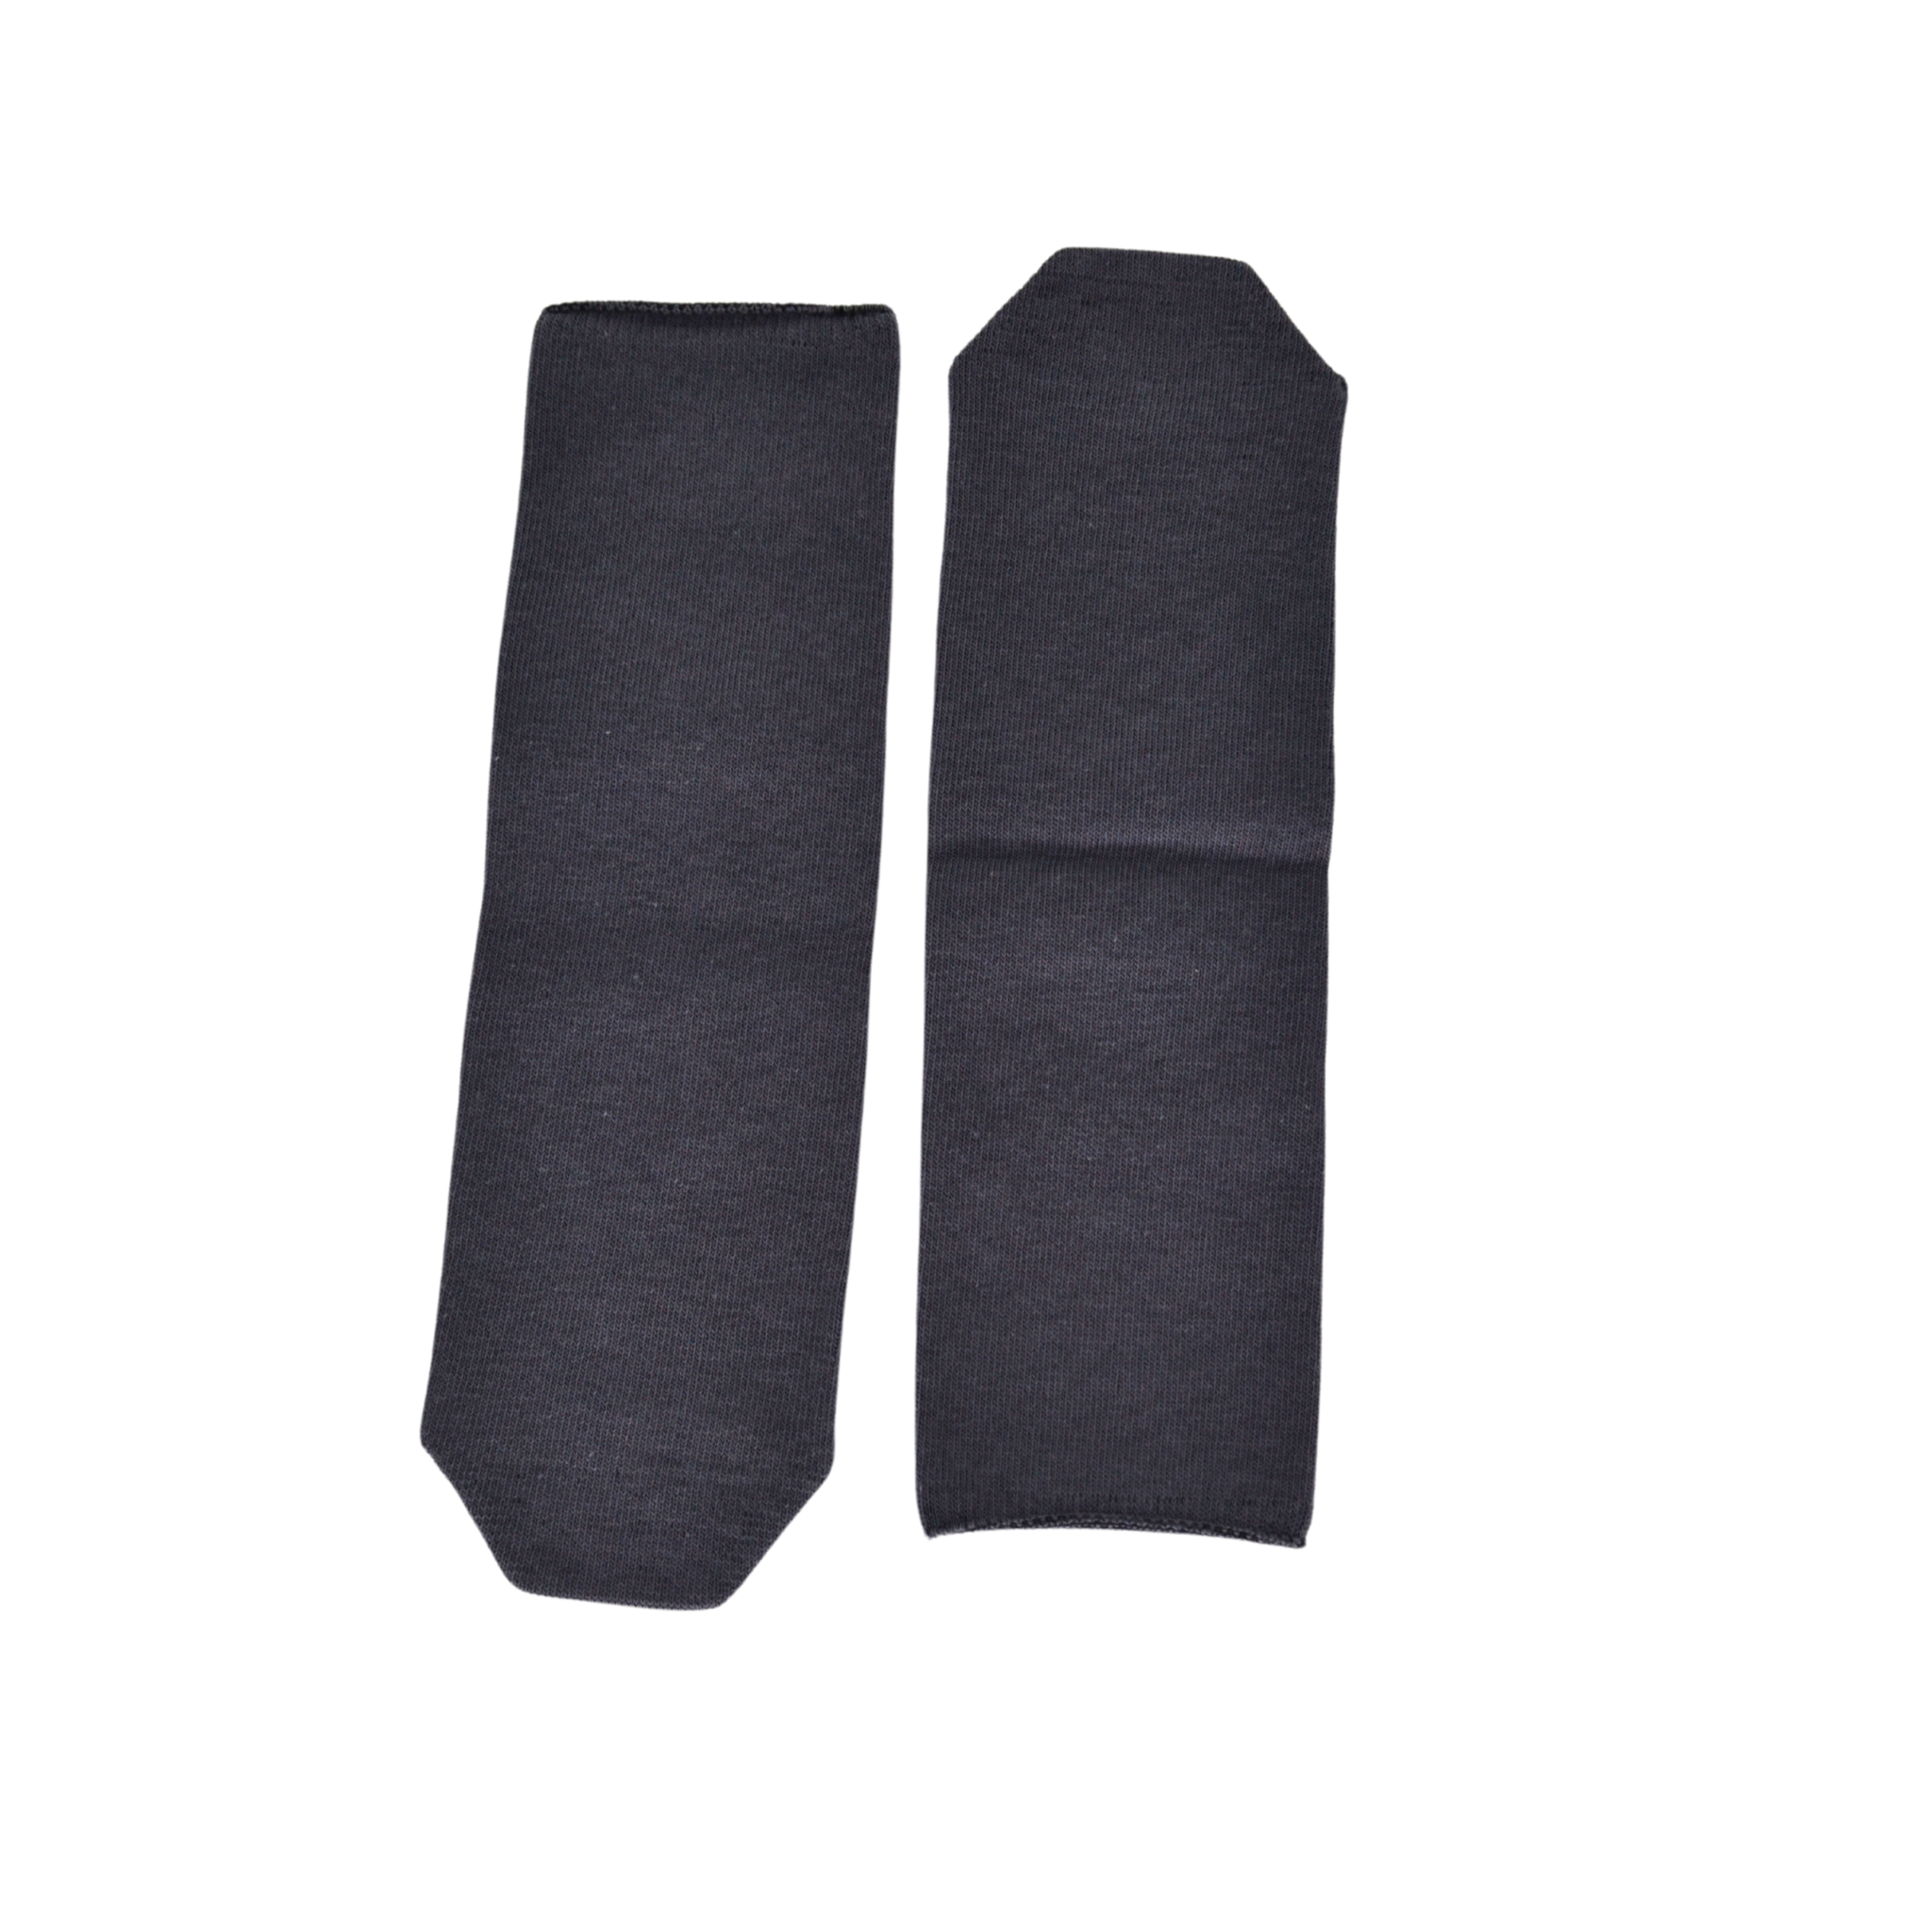 Sensory Clothing - Seamless Socks for Adults